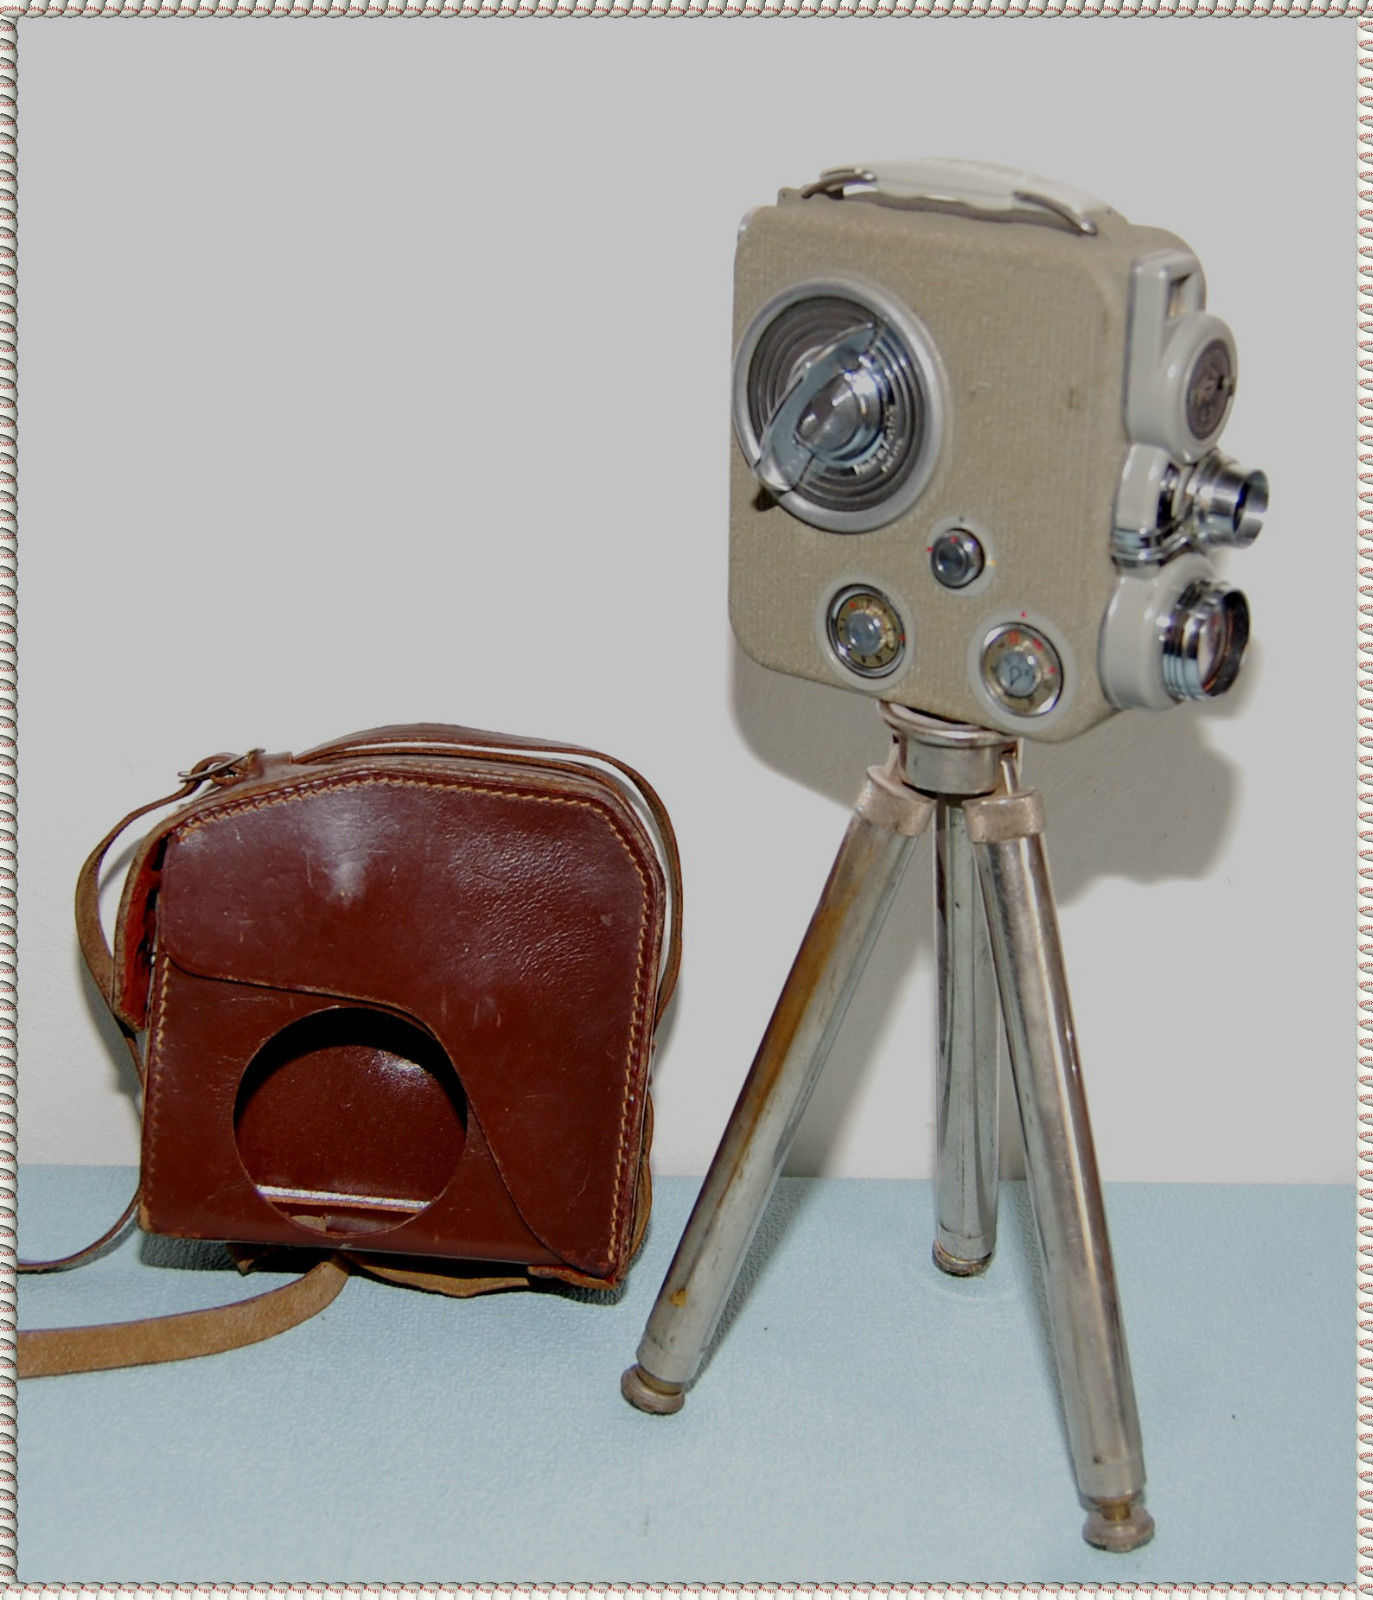 ancienne camera mécanique Eumig C3 